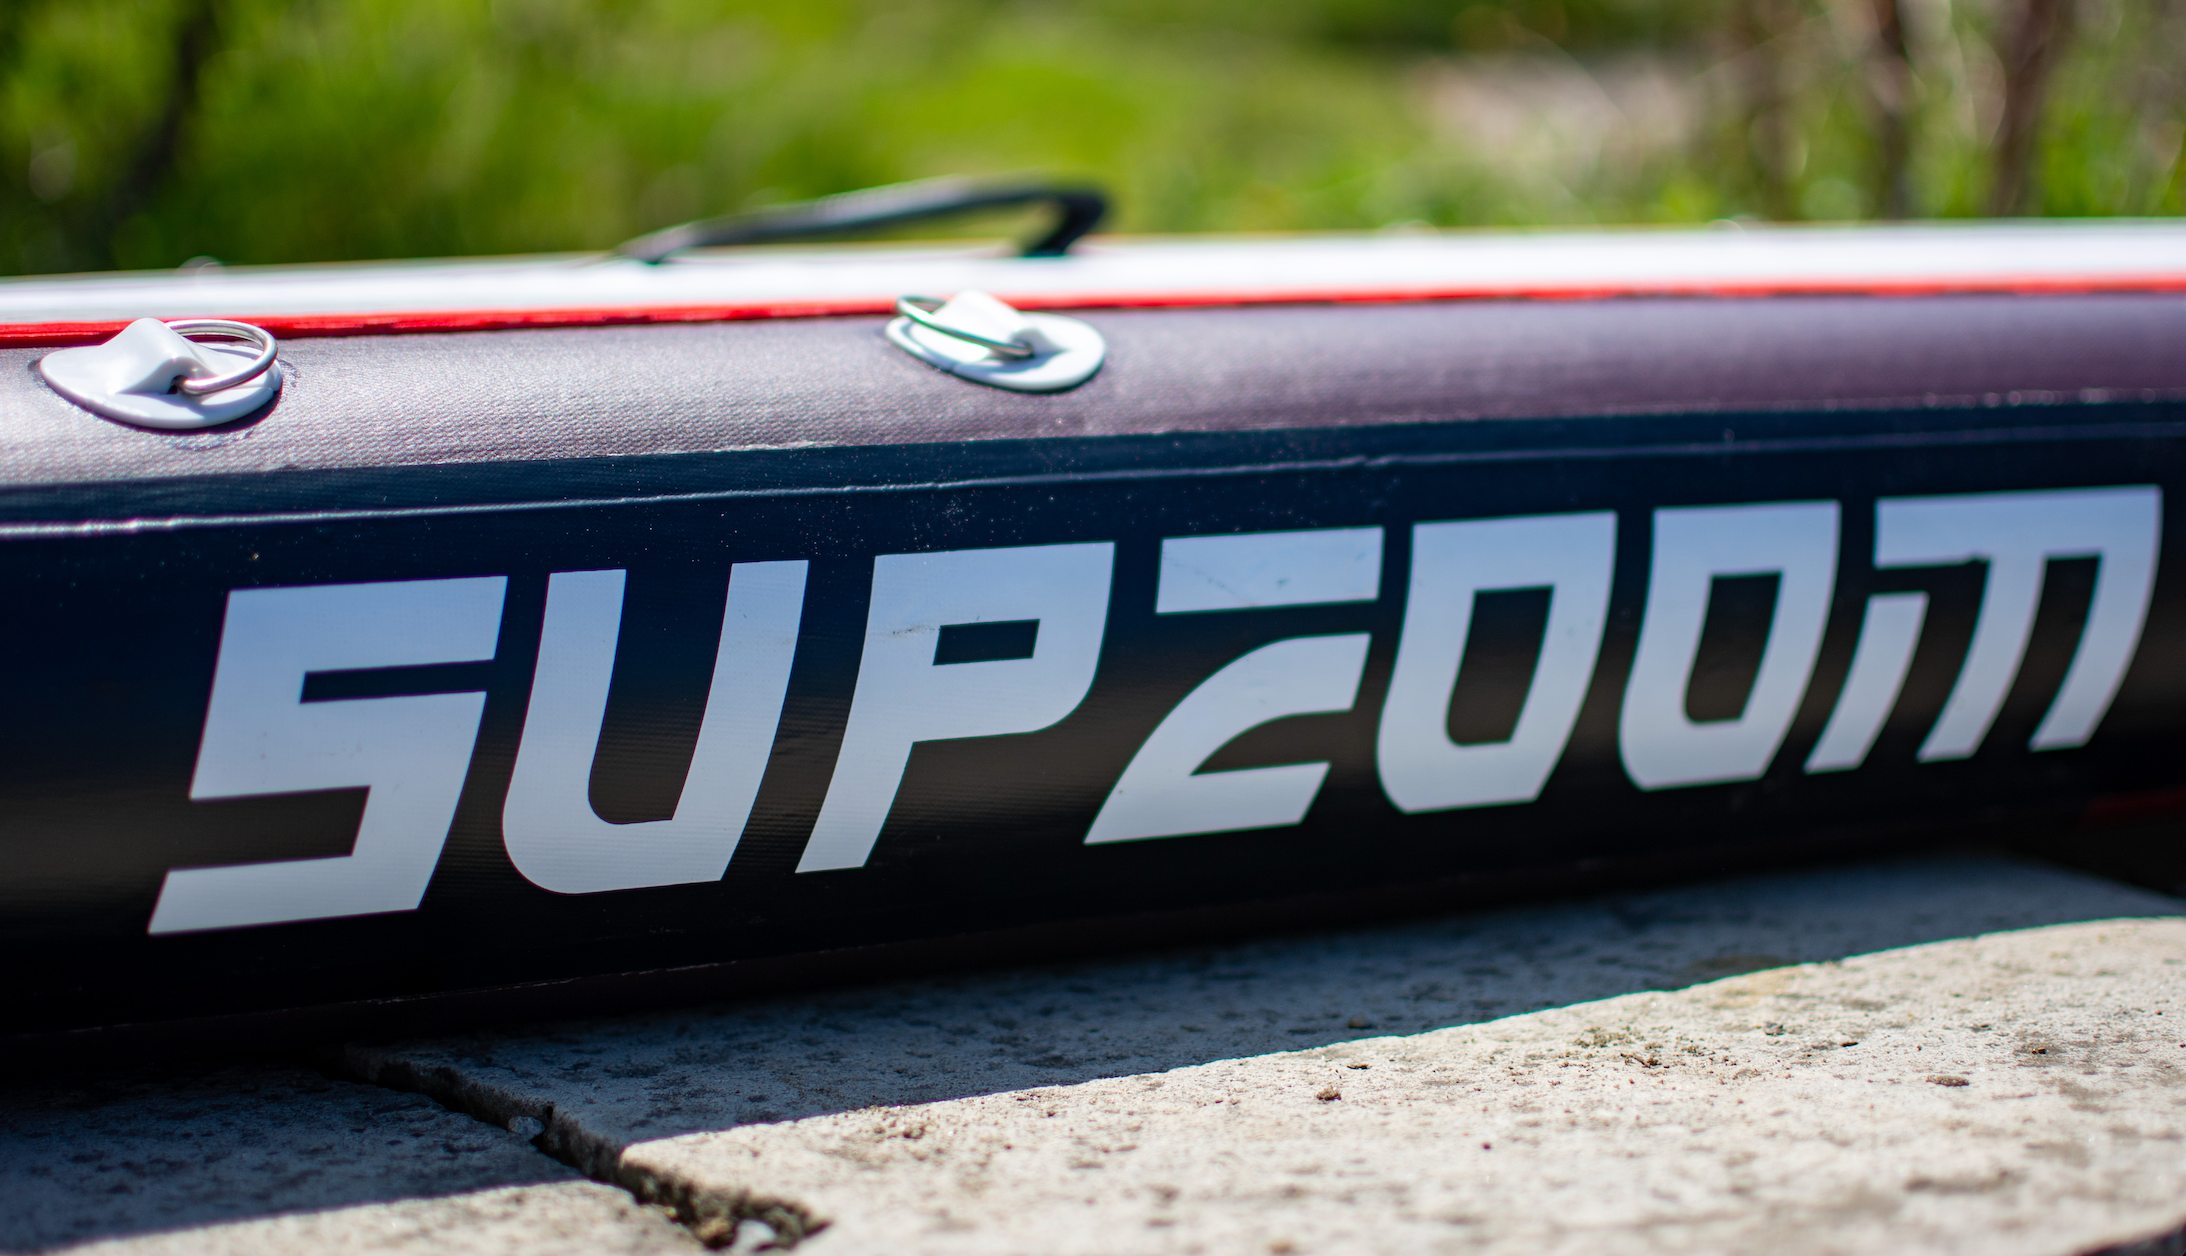 supzoom paddleboard